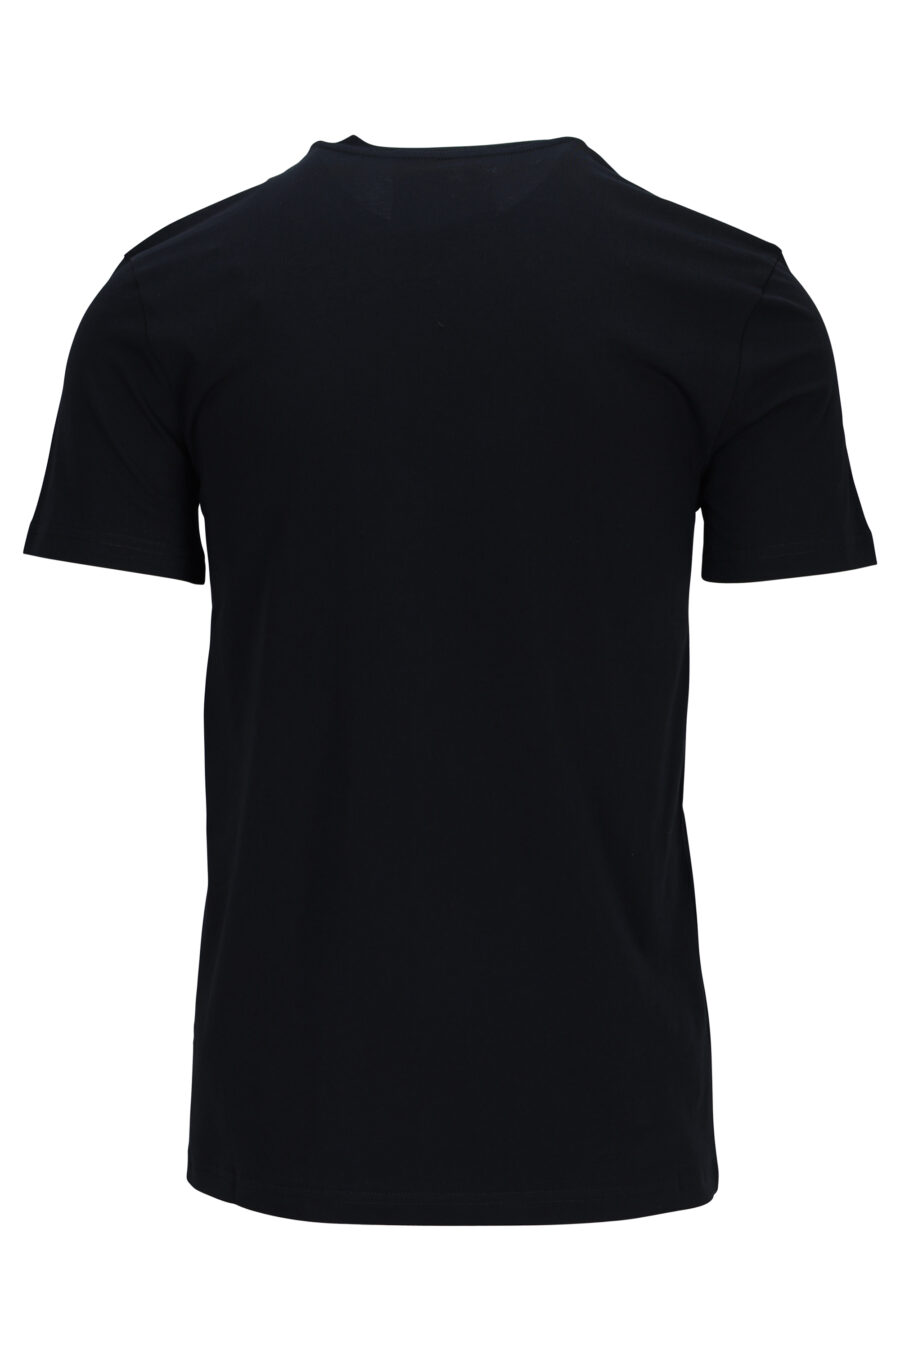 Schwarzes T-Shirt mit Maxilogue "couture milano" - 889316936551 1